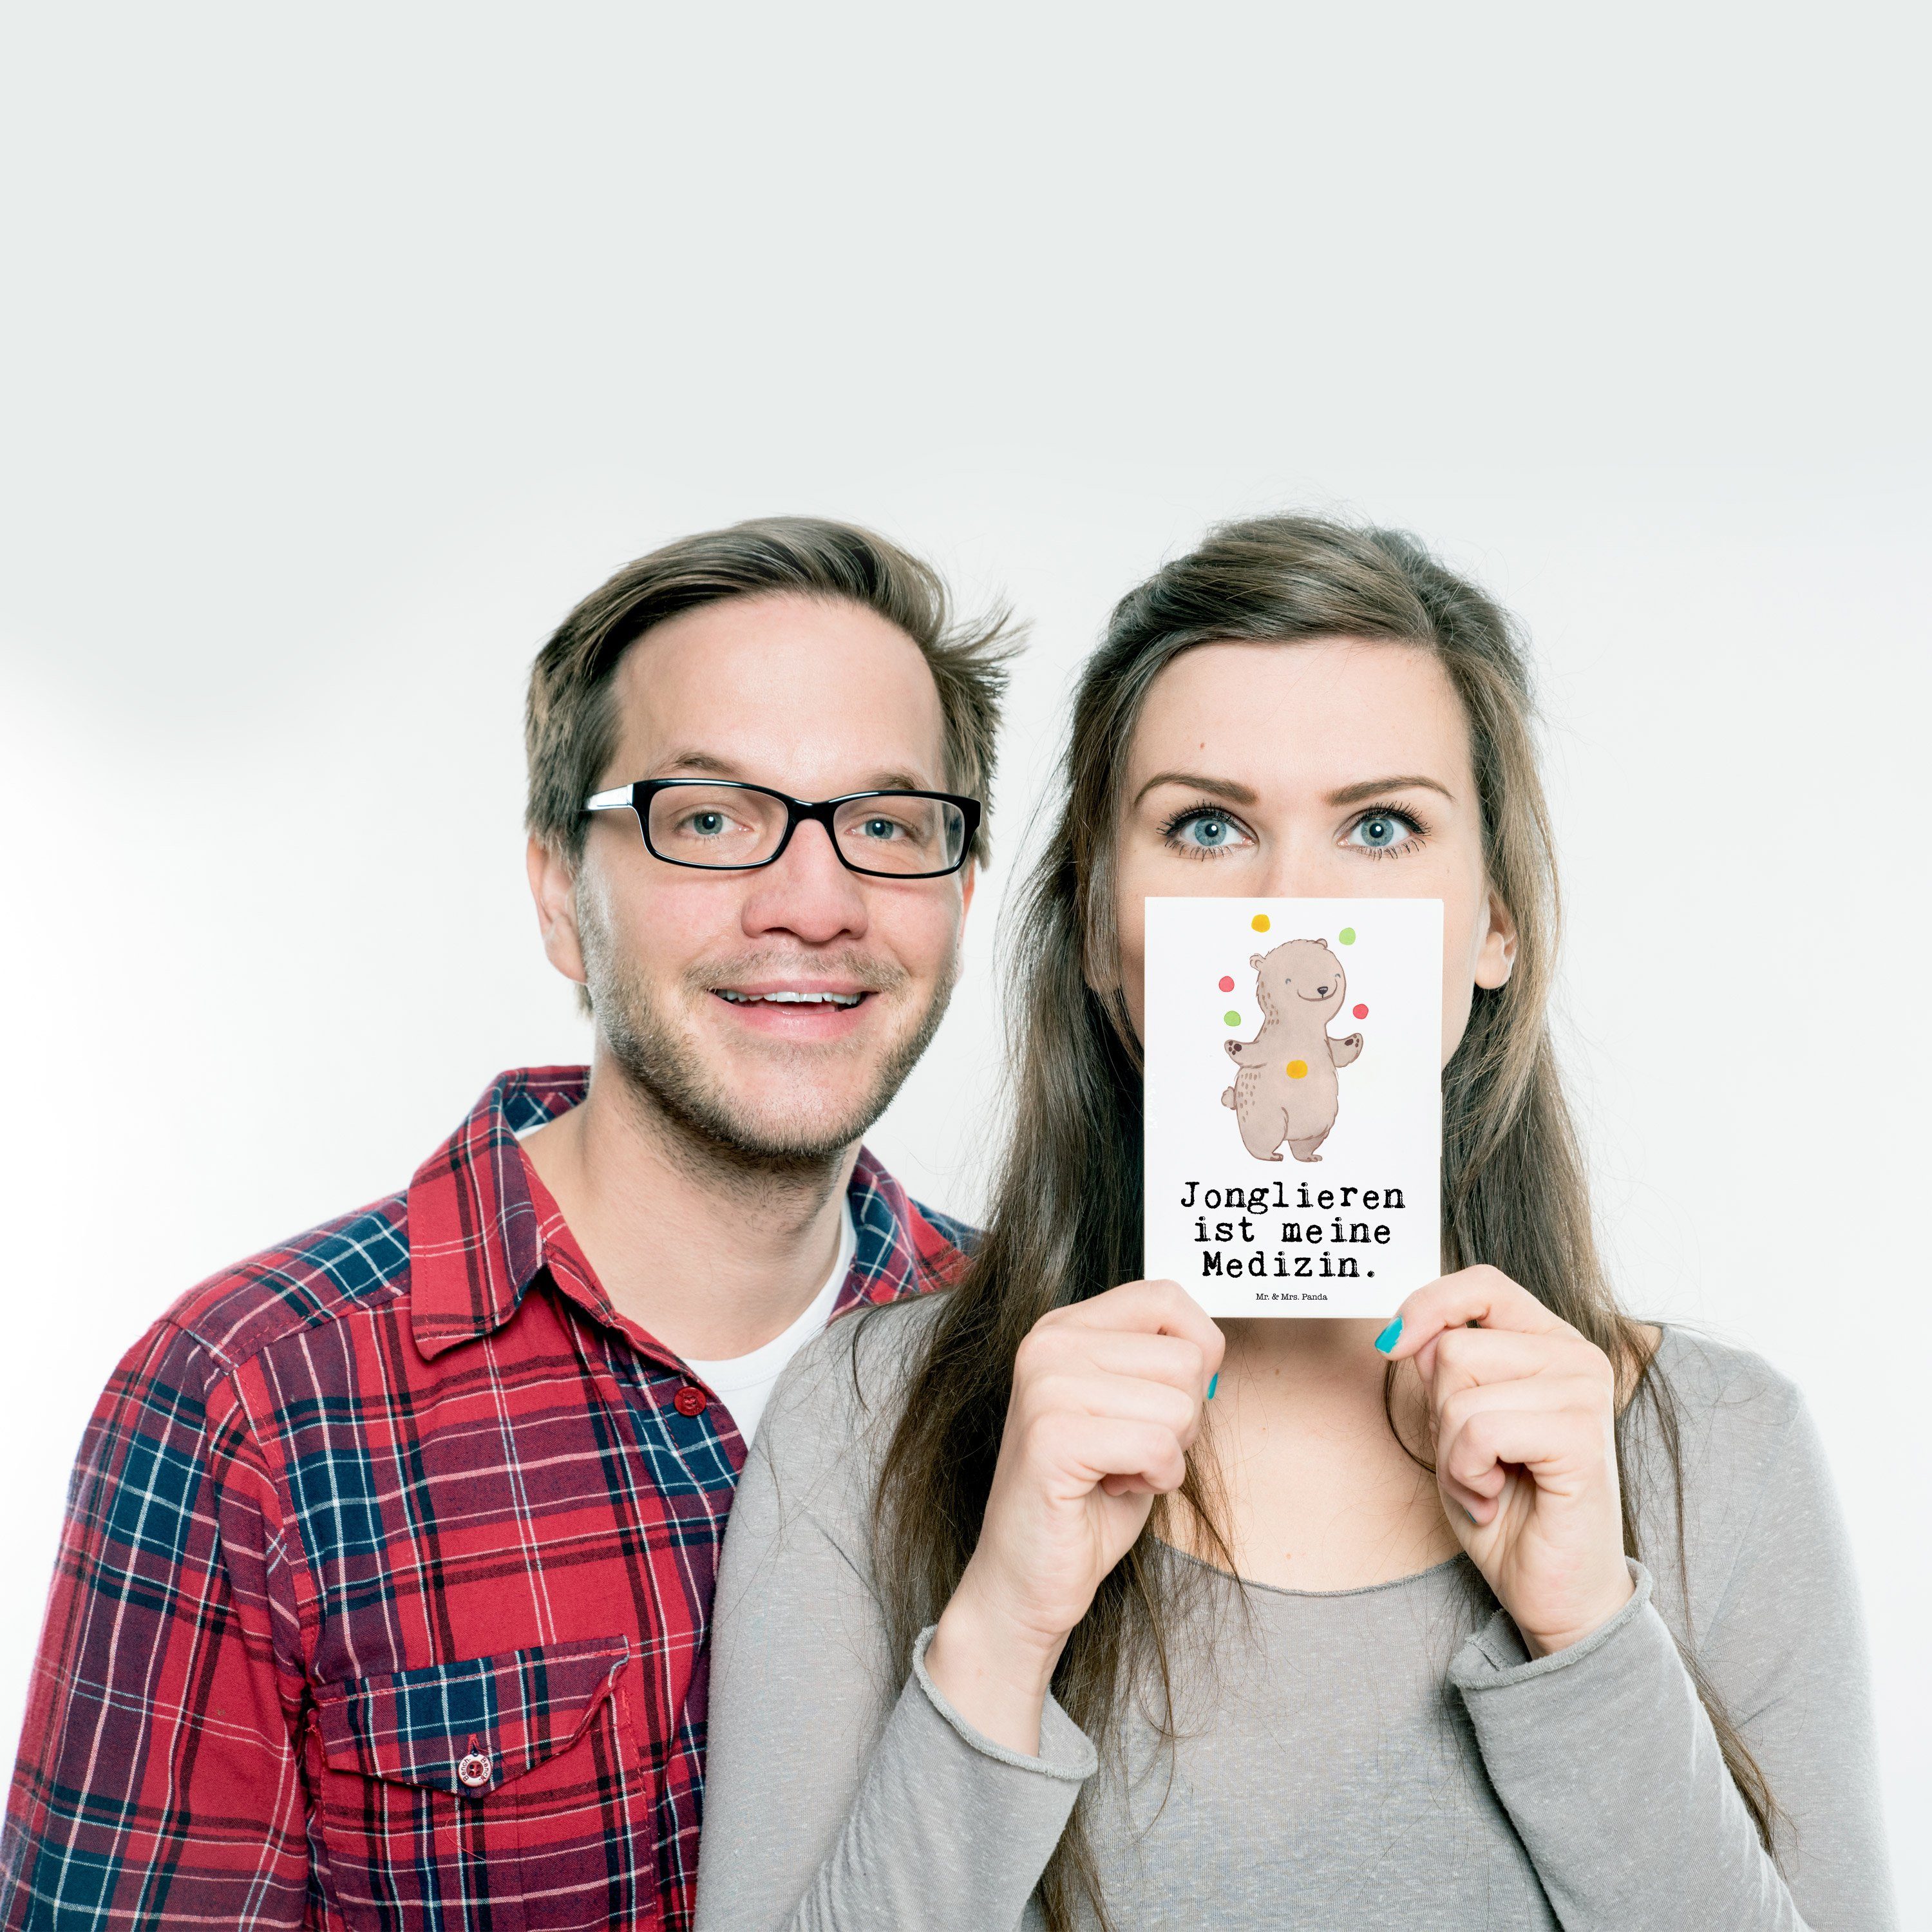 Mr. & Mrs. Panda Artistik, Postkarte Grußkarte, Jonglieren Medizin Einlad - Geschenk, - Bär Weiß